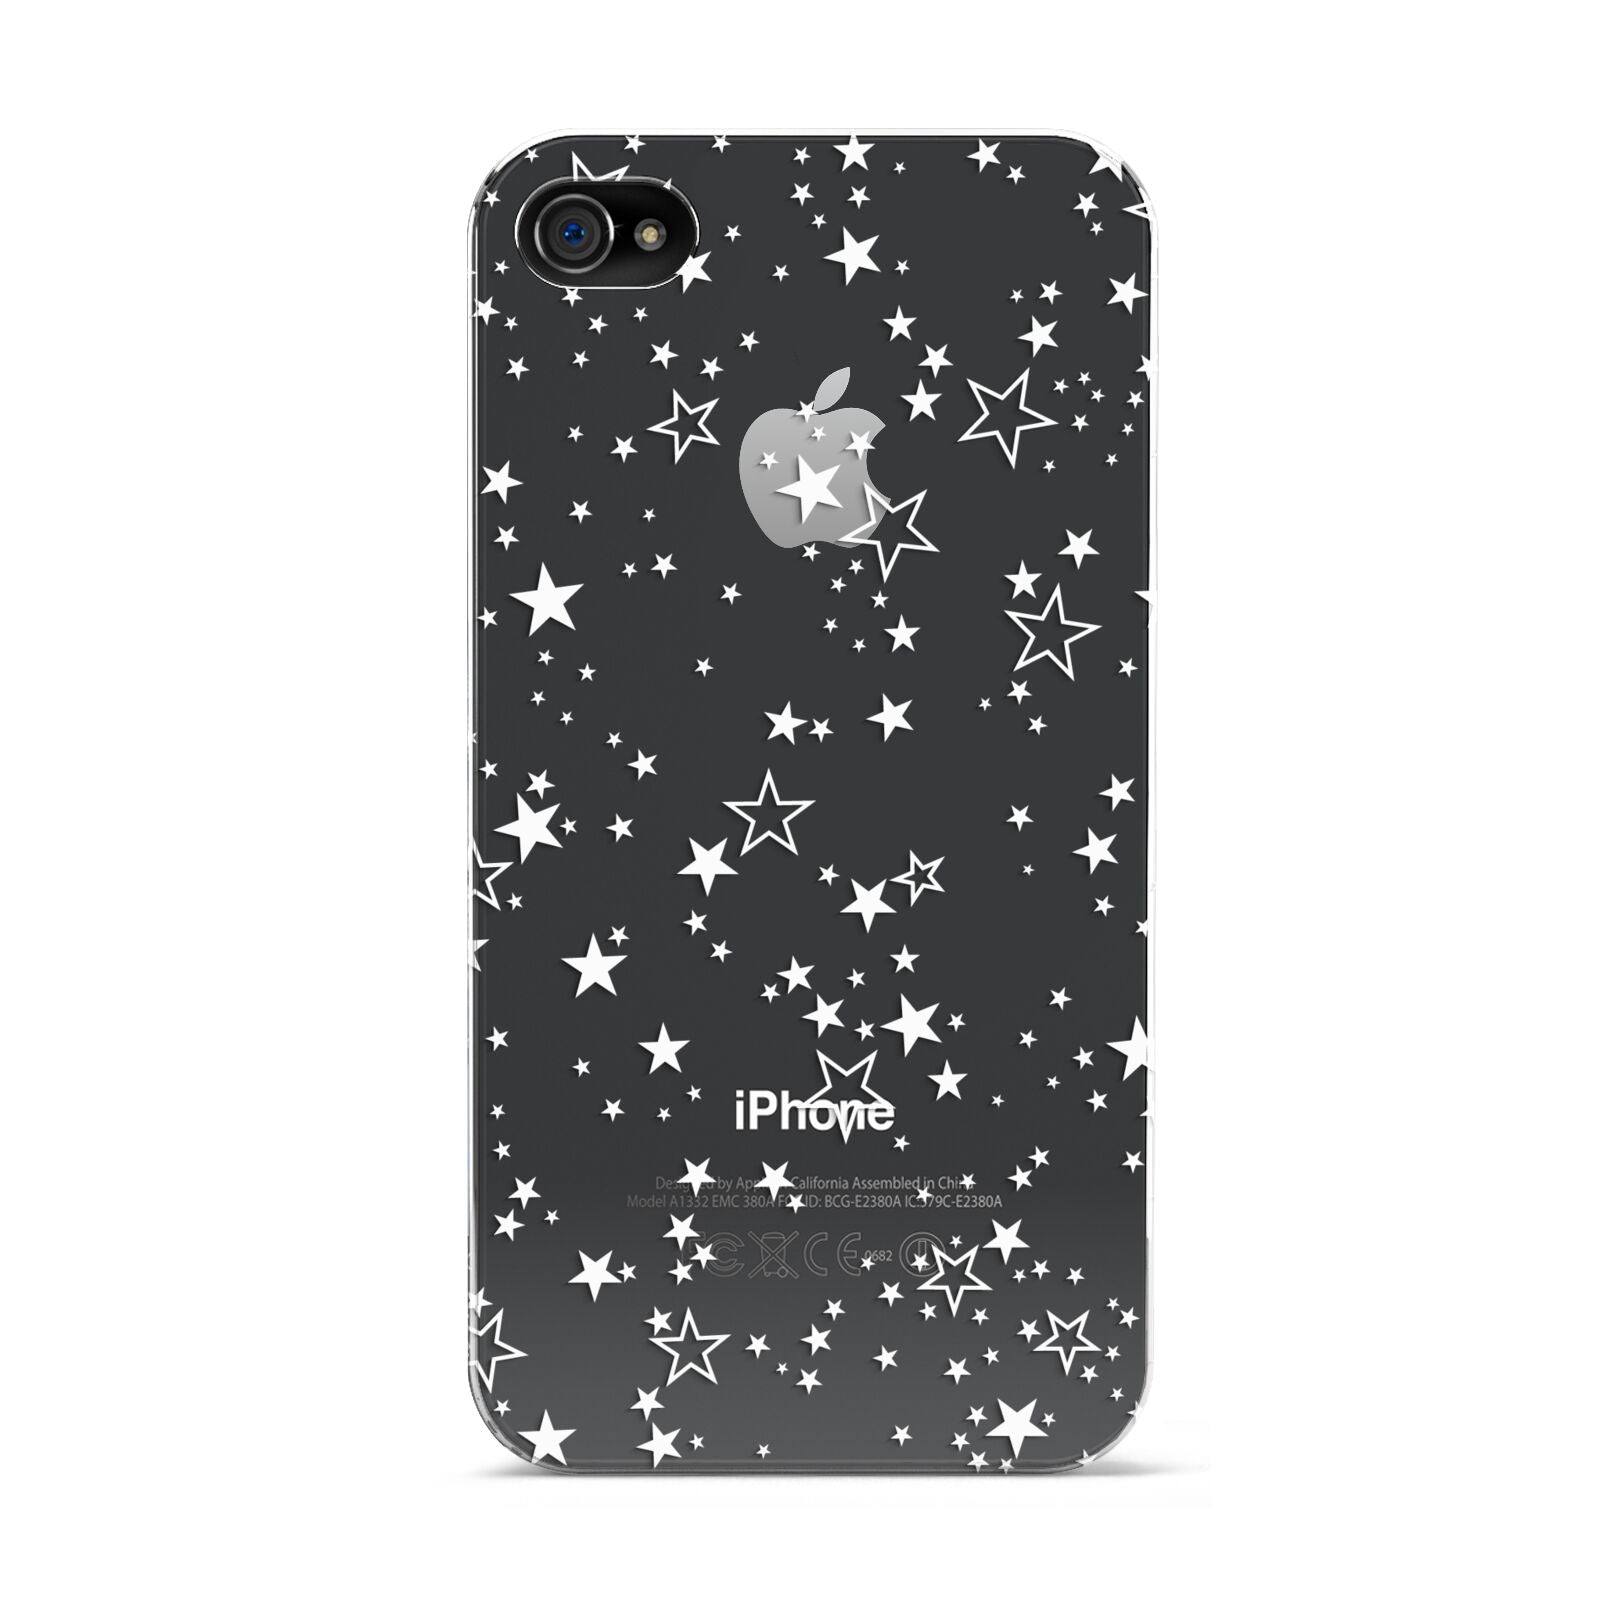 White Star Apple iPhone 4s Case